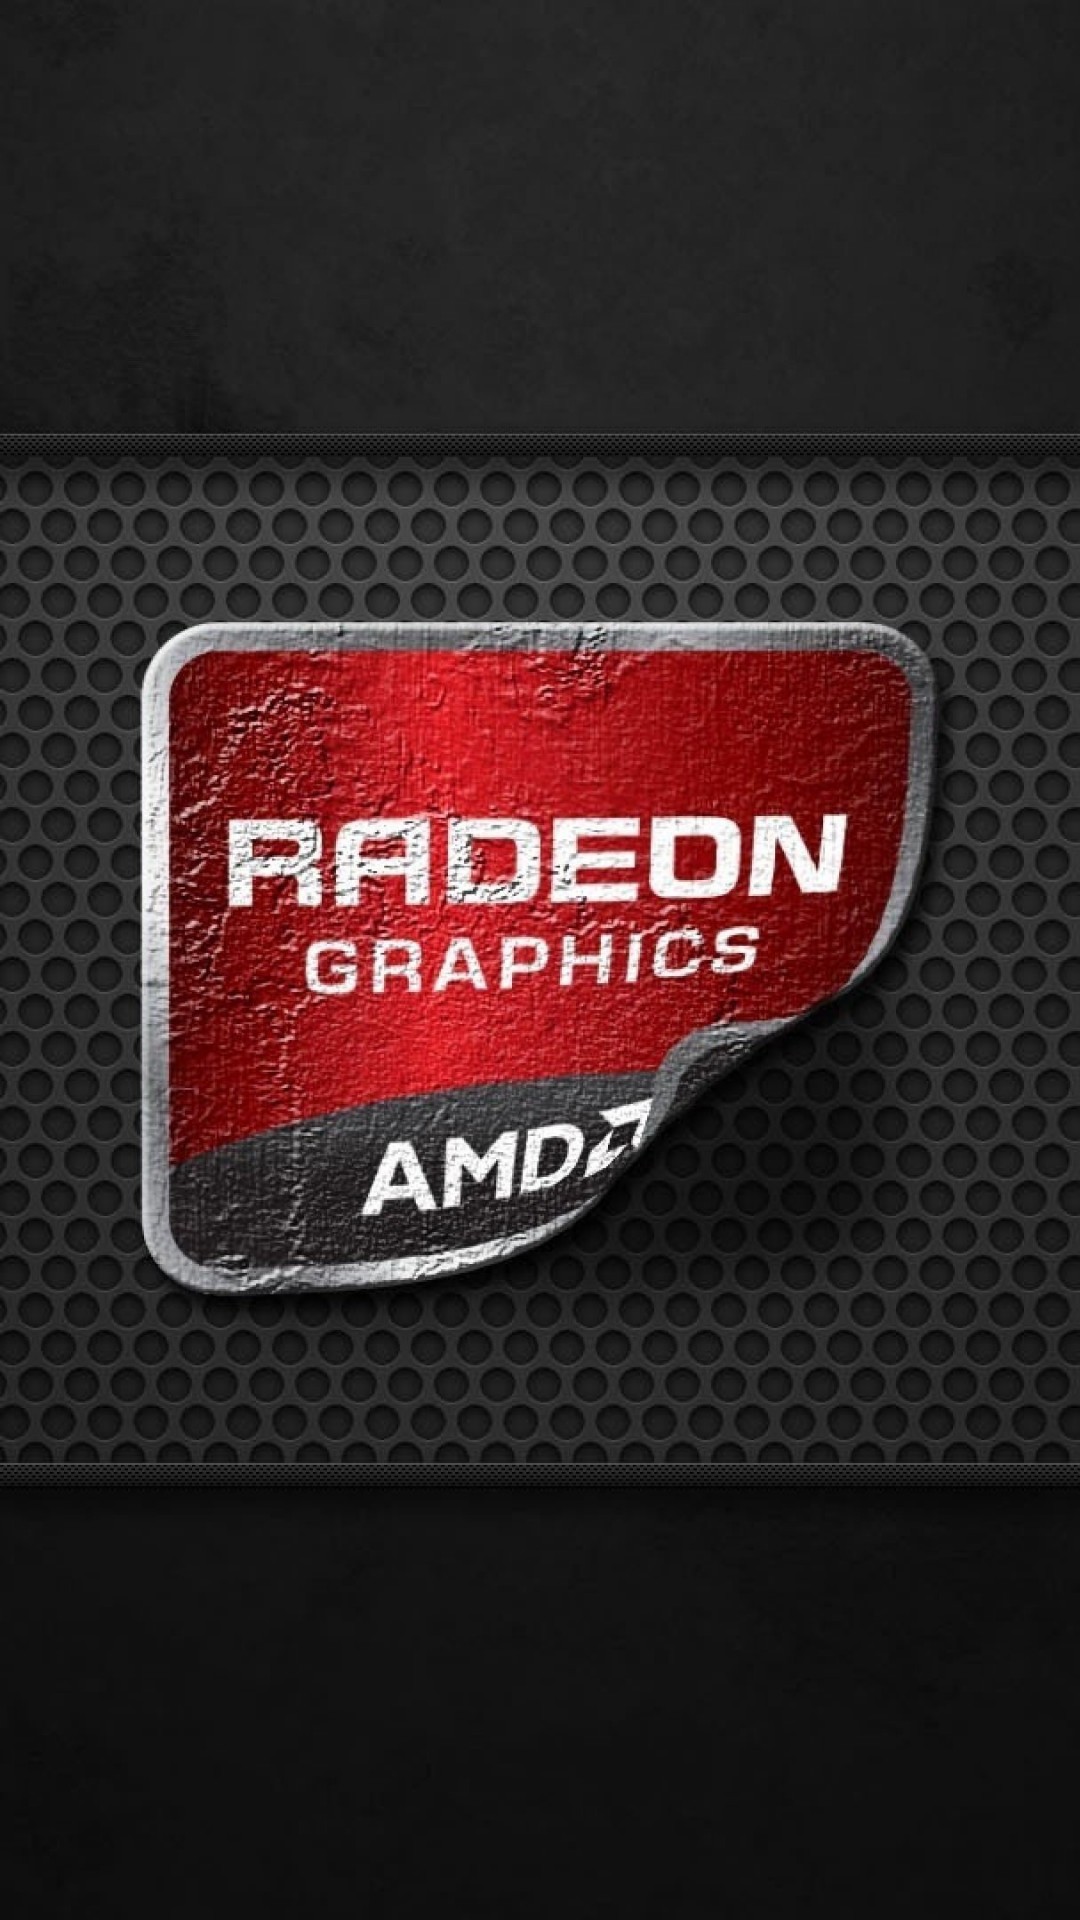 AMD Radeon Graphics Wallpaper for LG G2